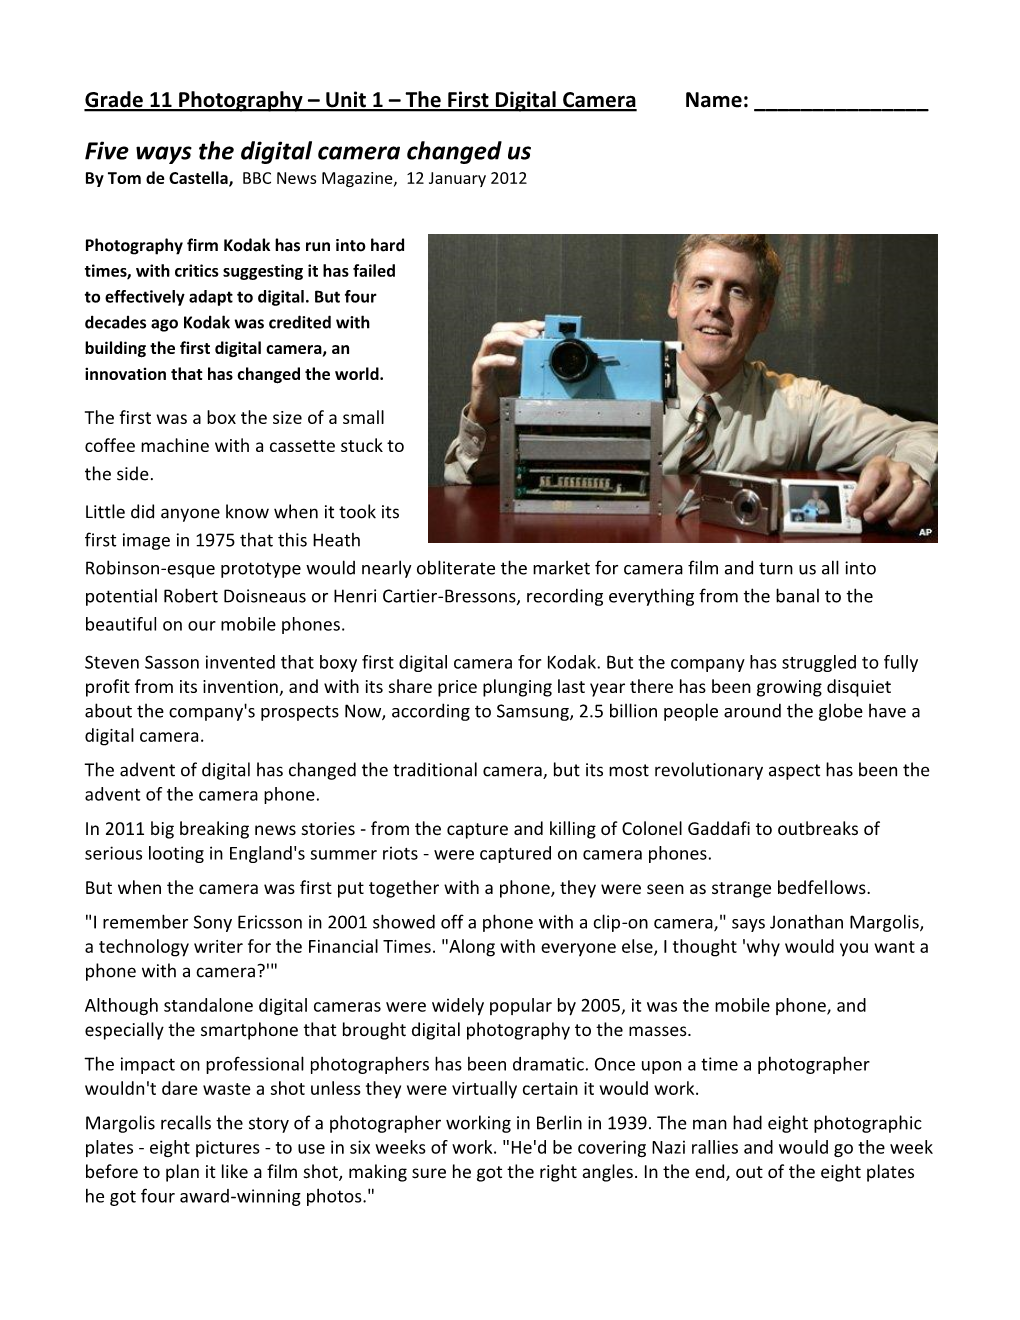 Five Ways the Digital Camera Changed Us by Tom De Castella, BBC News Magazine, 12 January 2012